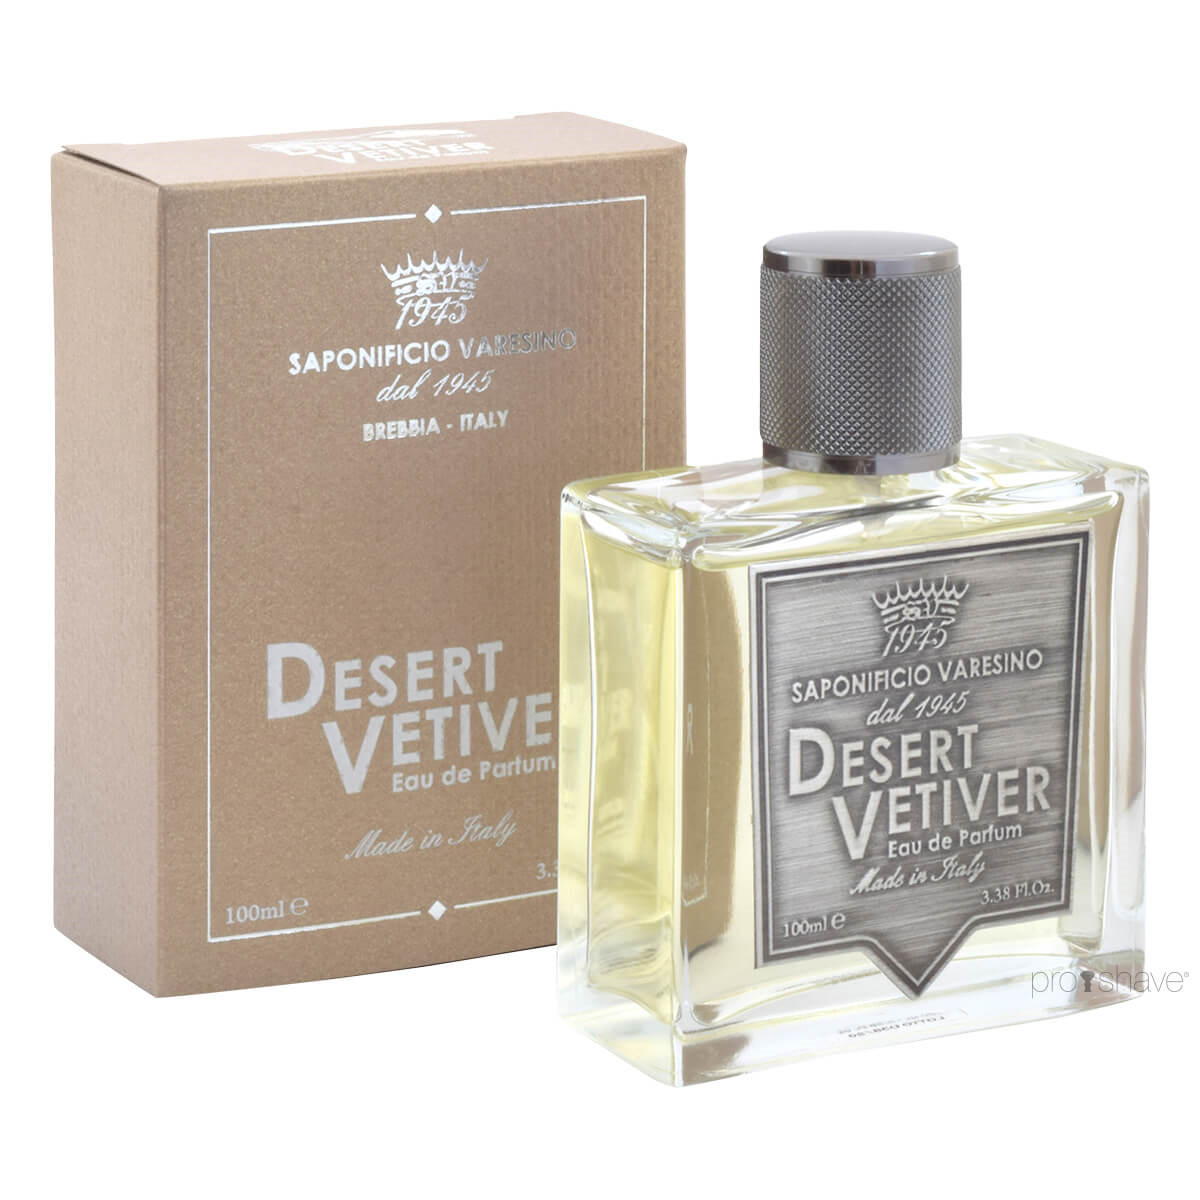 Se Saponificio Varesino Eau de Parfum, Desert Vetiver, 100 ml. hos Proshave